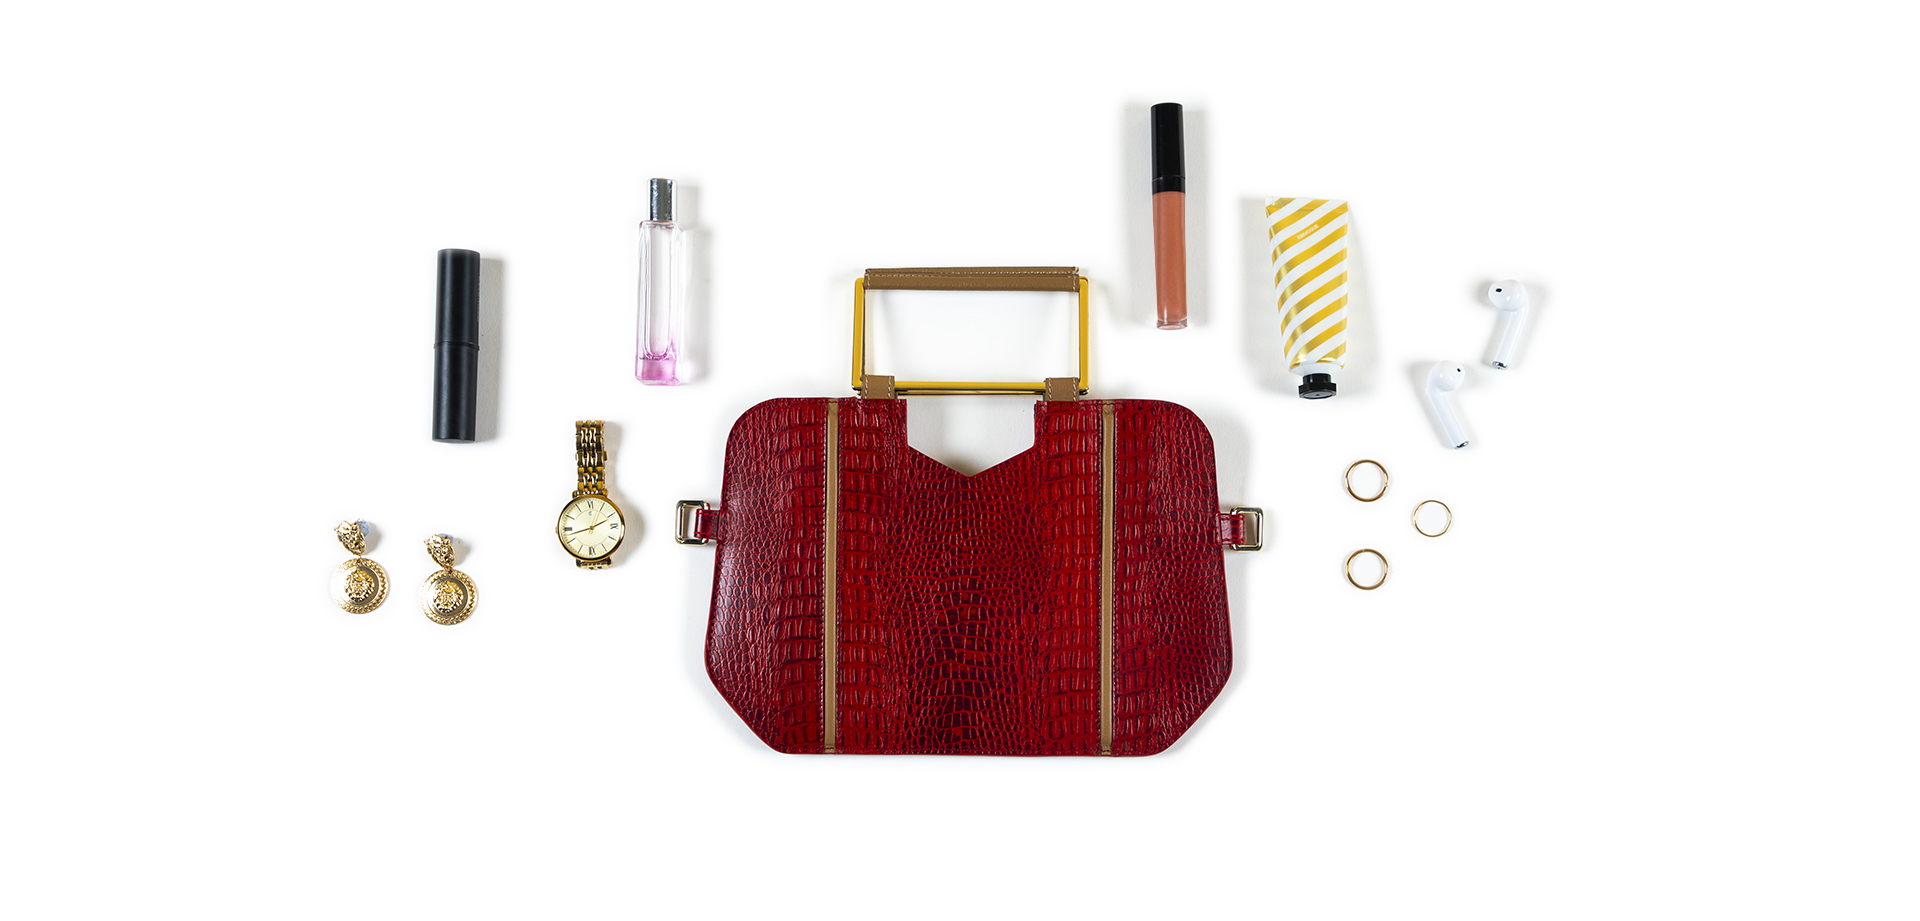 Sleek Triad Clutch in Red leather fits cosmetics & phone